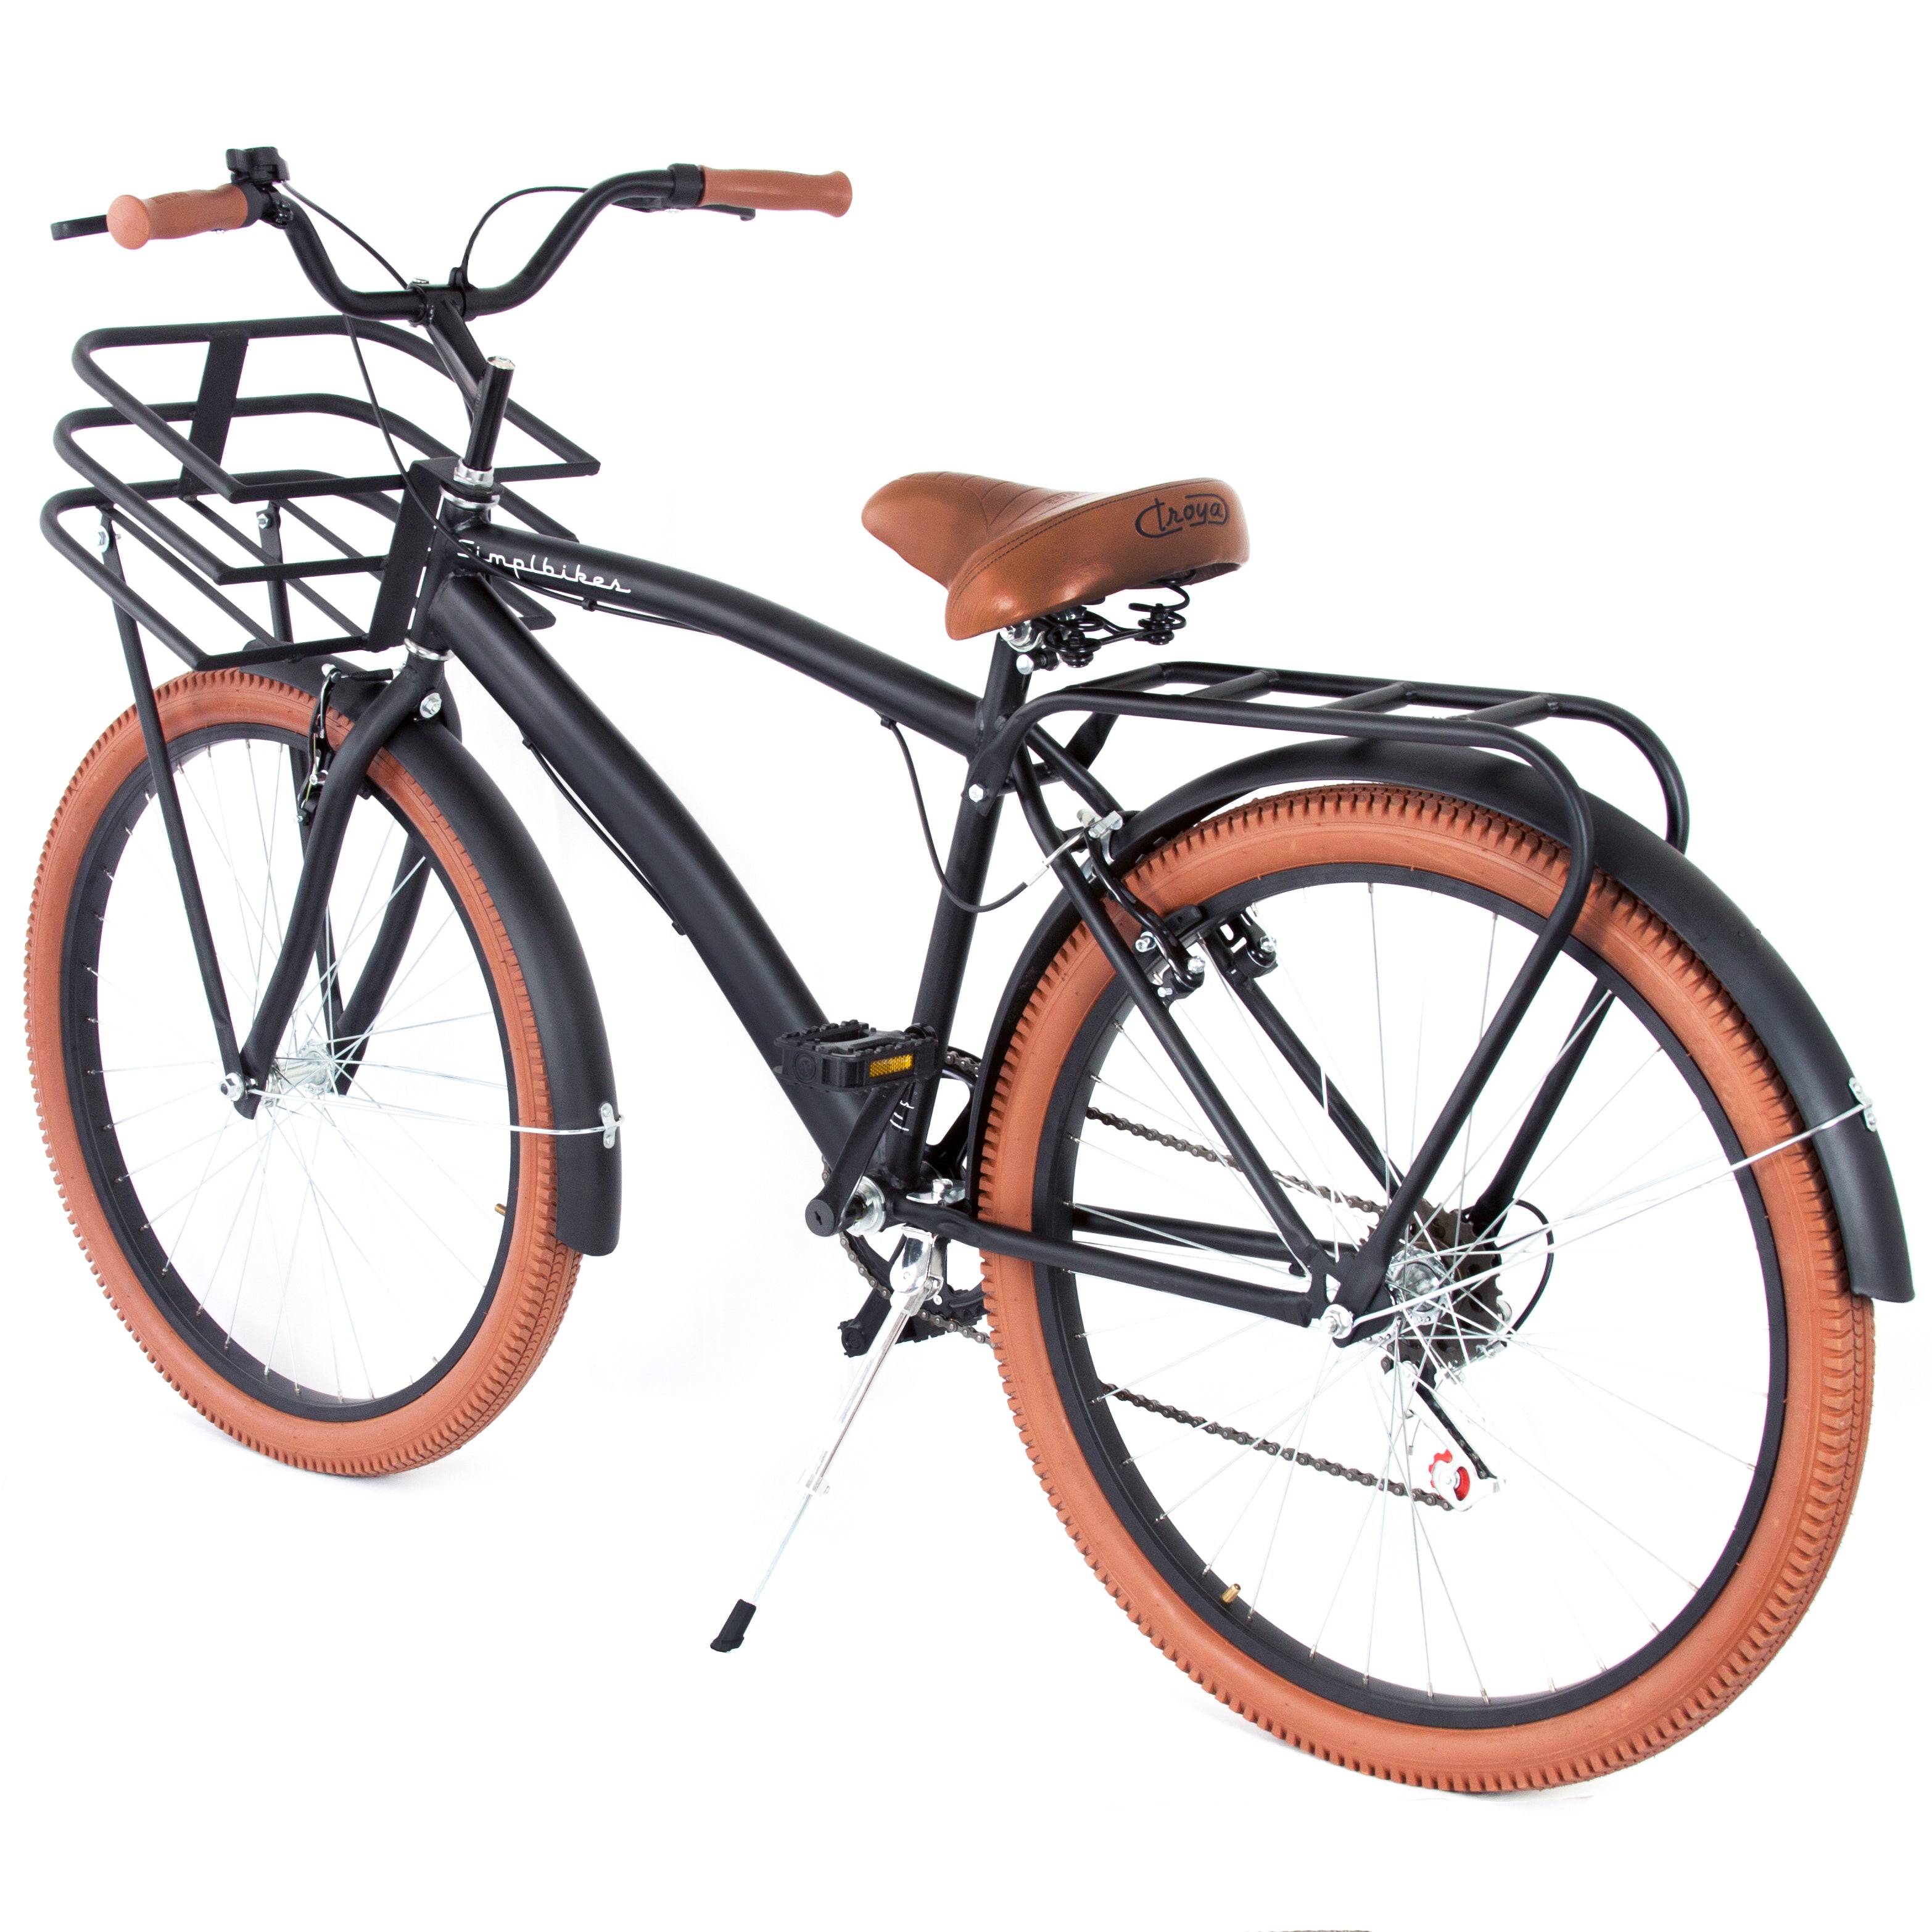 Ridewill bike 588160051 cesta para bicicleta ovalada con ganchos negr